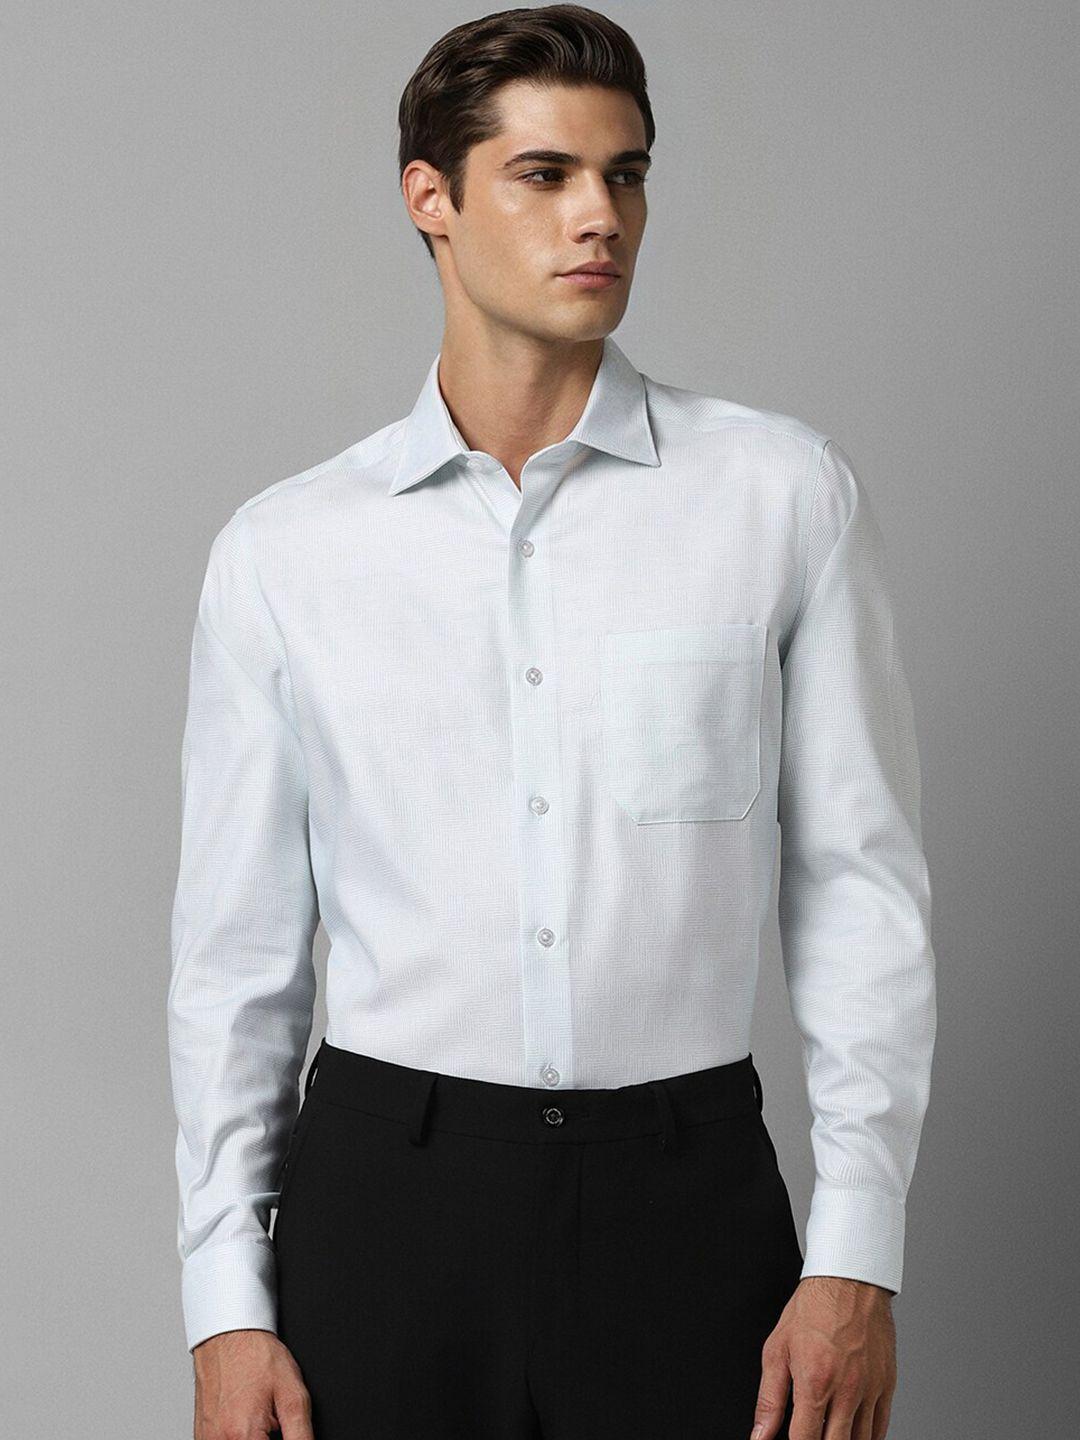 louis philippe spread collar geometric printed pure cotton formal shirt